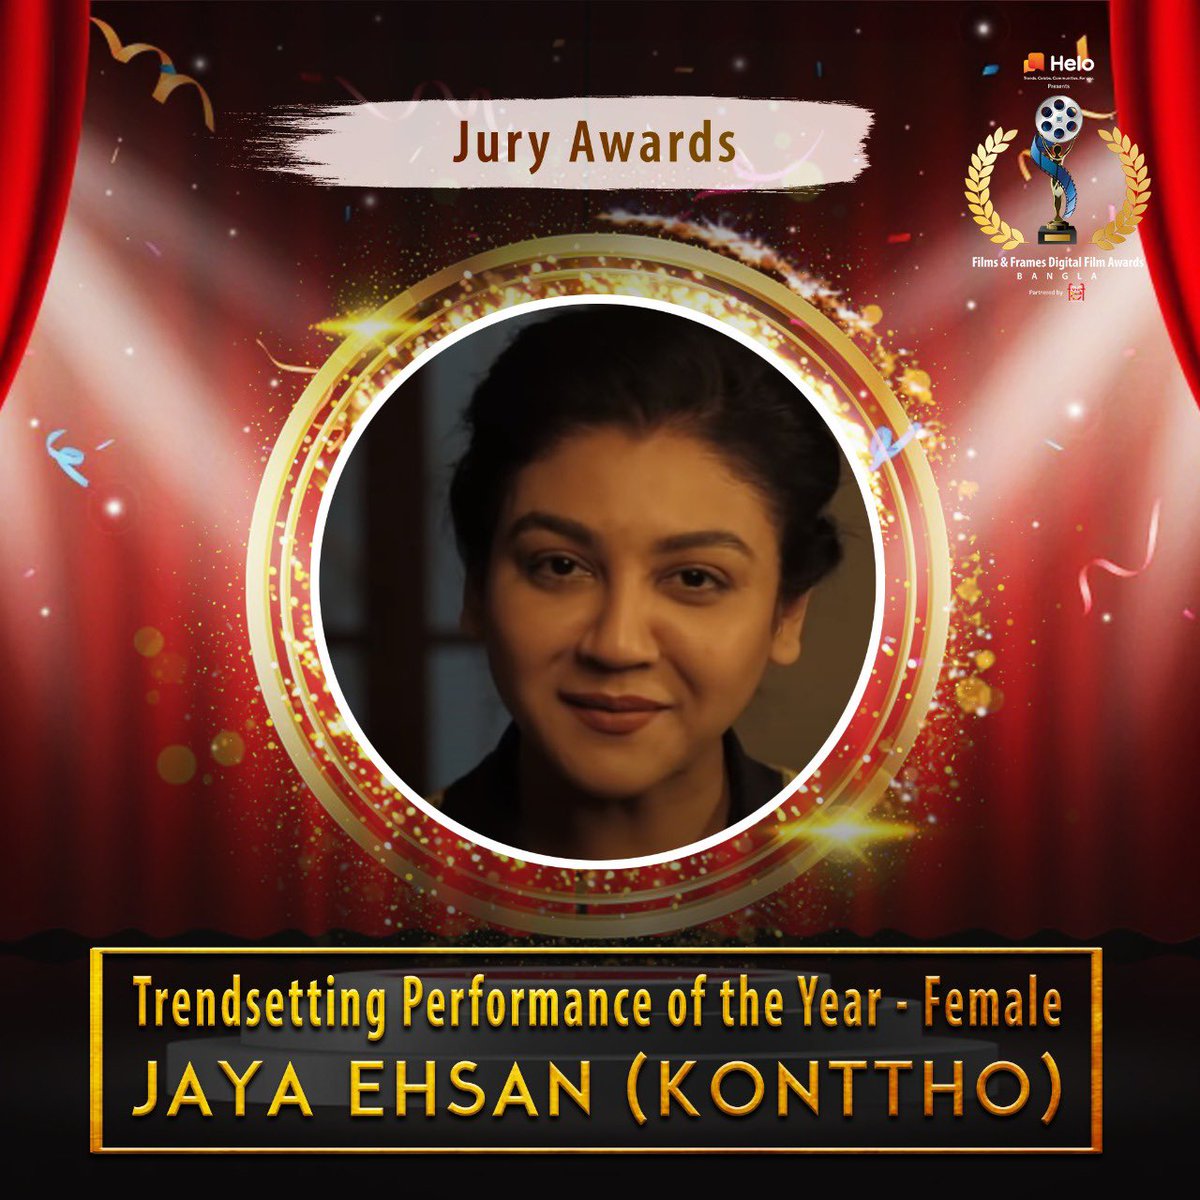 Trendsetting Performance of the Year (Female) Award goes to #jayaahsan for Konttho. Congratulations! #FAFDA2020 #HeloDigitalBengaliAwards #HeloFilmsandFramesDigitalFilmAwards @JayaAhsan2 @gbsaltlake @indraroy @ziniasen123 @ShiboprosadM